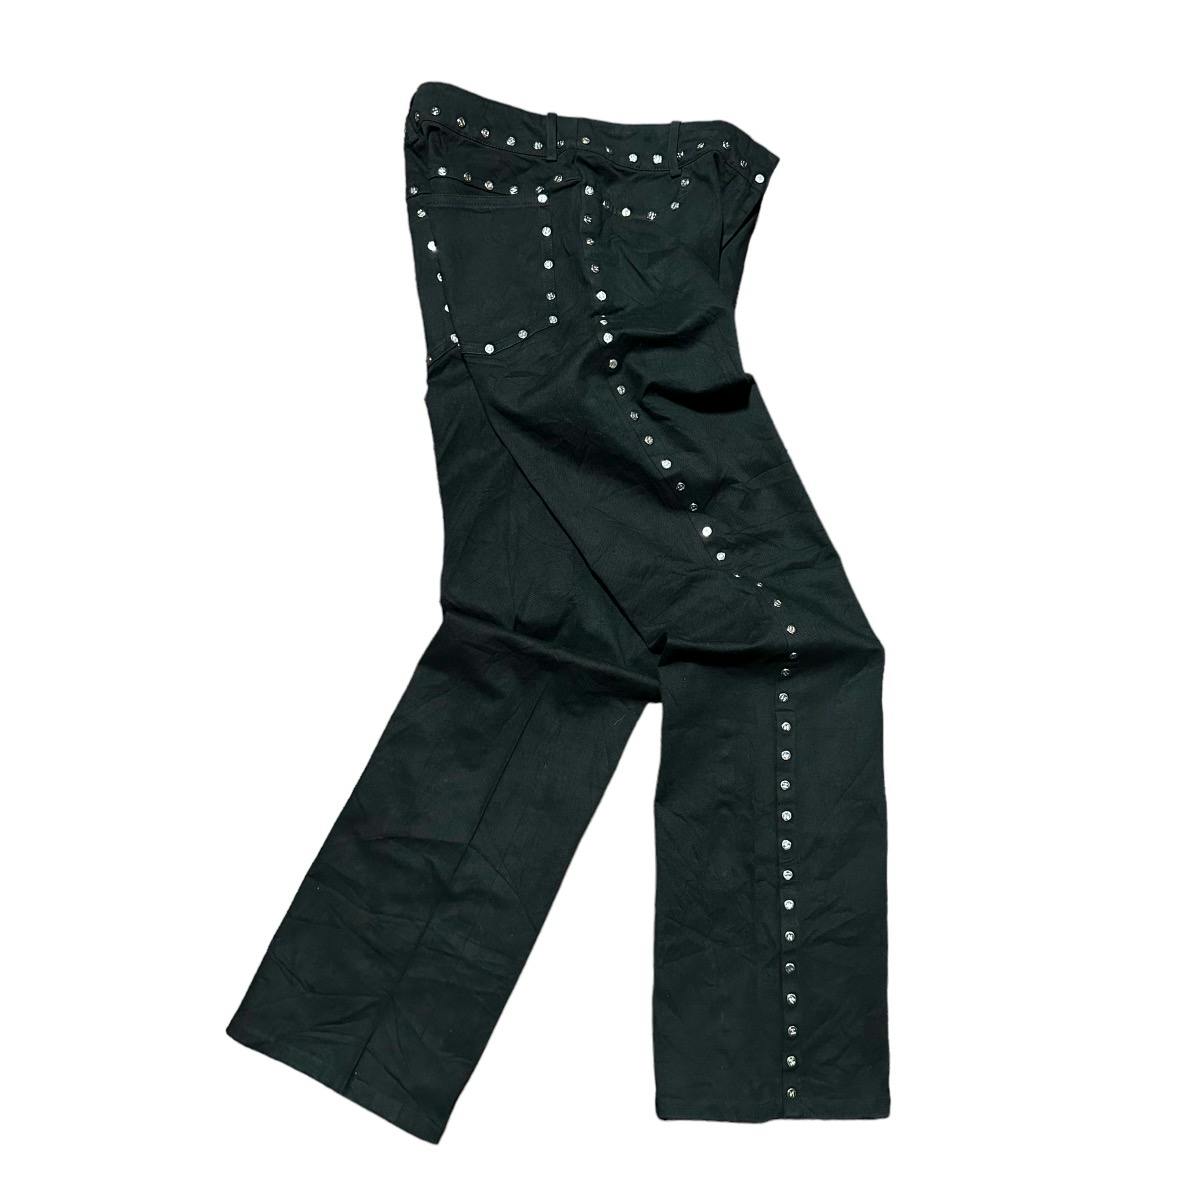 Studded Black Denim Pants - 1